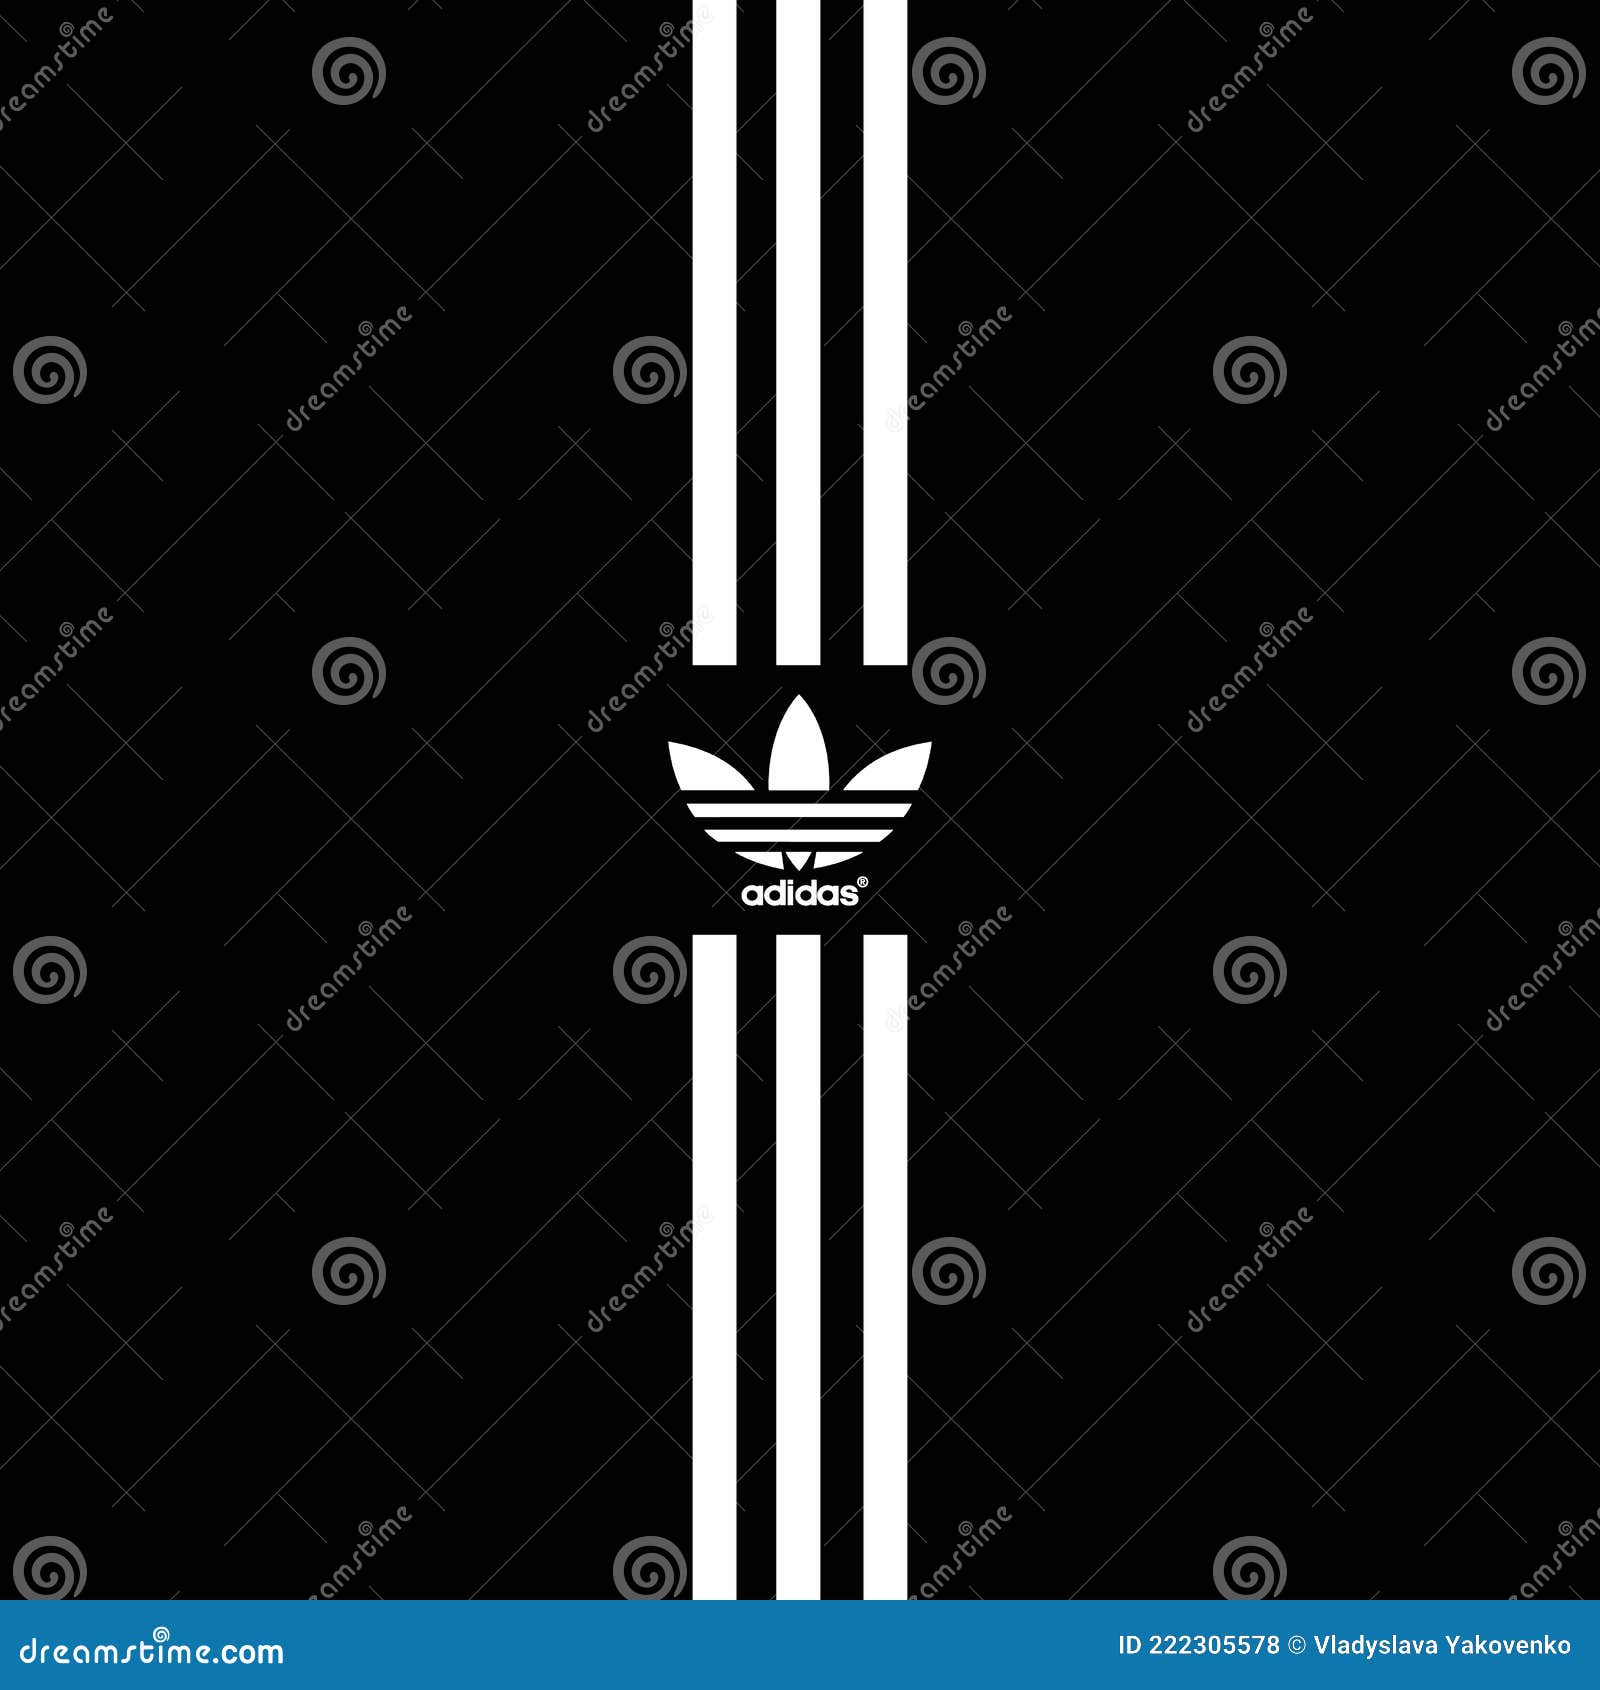 Adidas Background. Adidas Sportwear Brands. Logo of Sports Equipment and Sportswear Company. Vector. Zaporizhzhia, Editorial Stock Photo - Illustration of german, 222305578